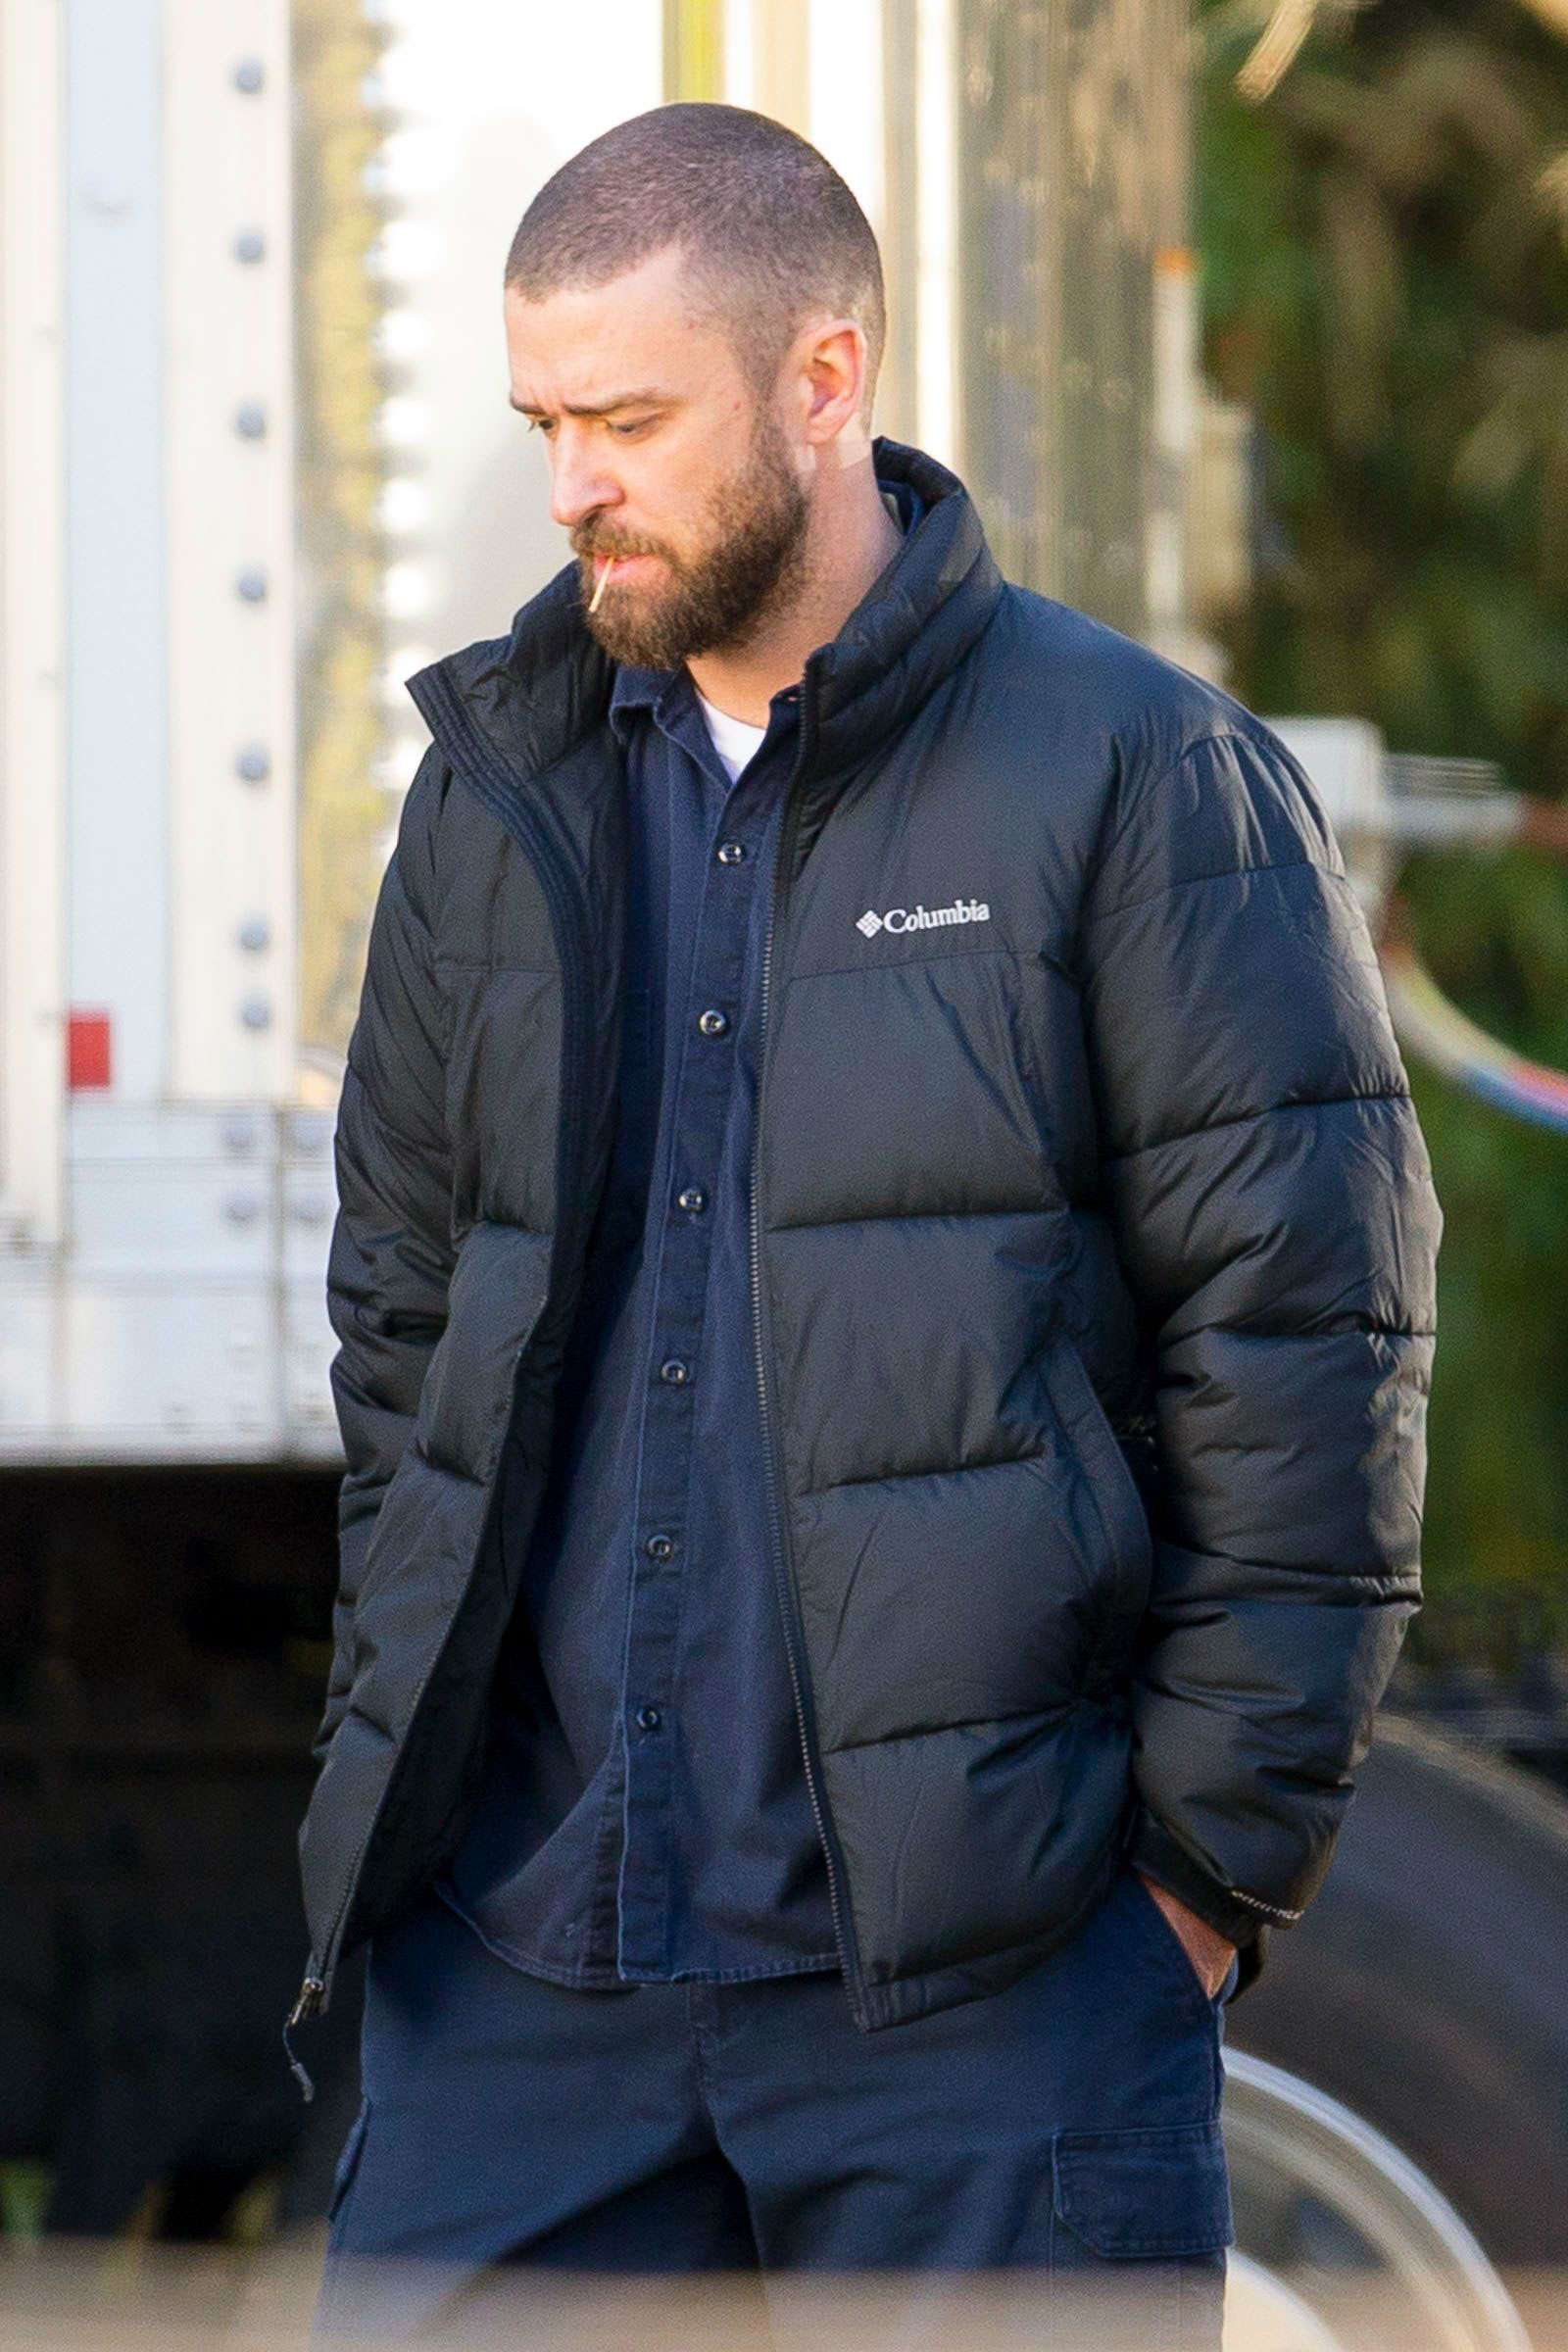 Justin Timberlake Returns to Work Filming ‘Palmer’ After Alisha Wainwright PDA Scandal